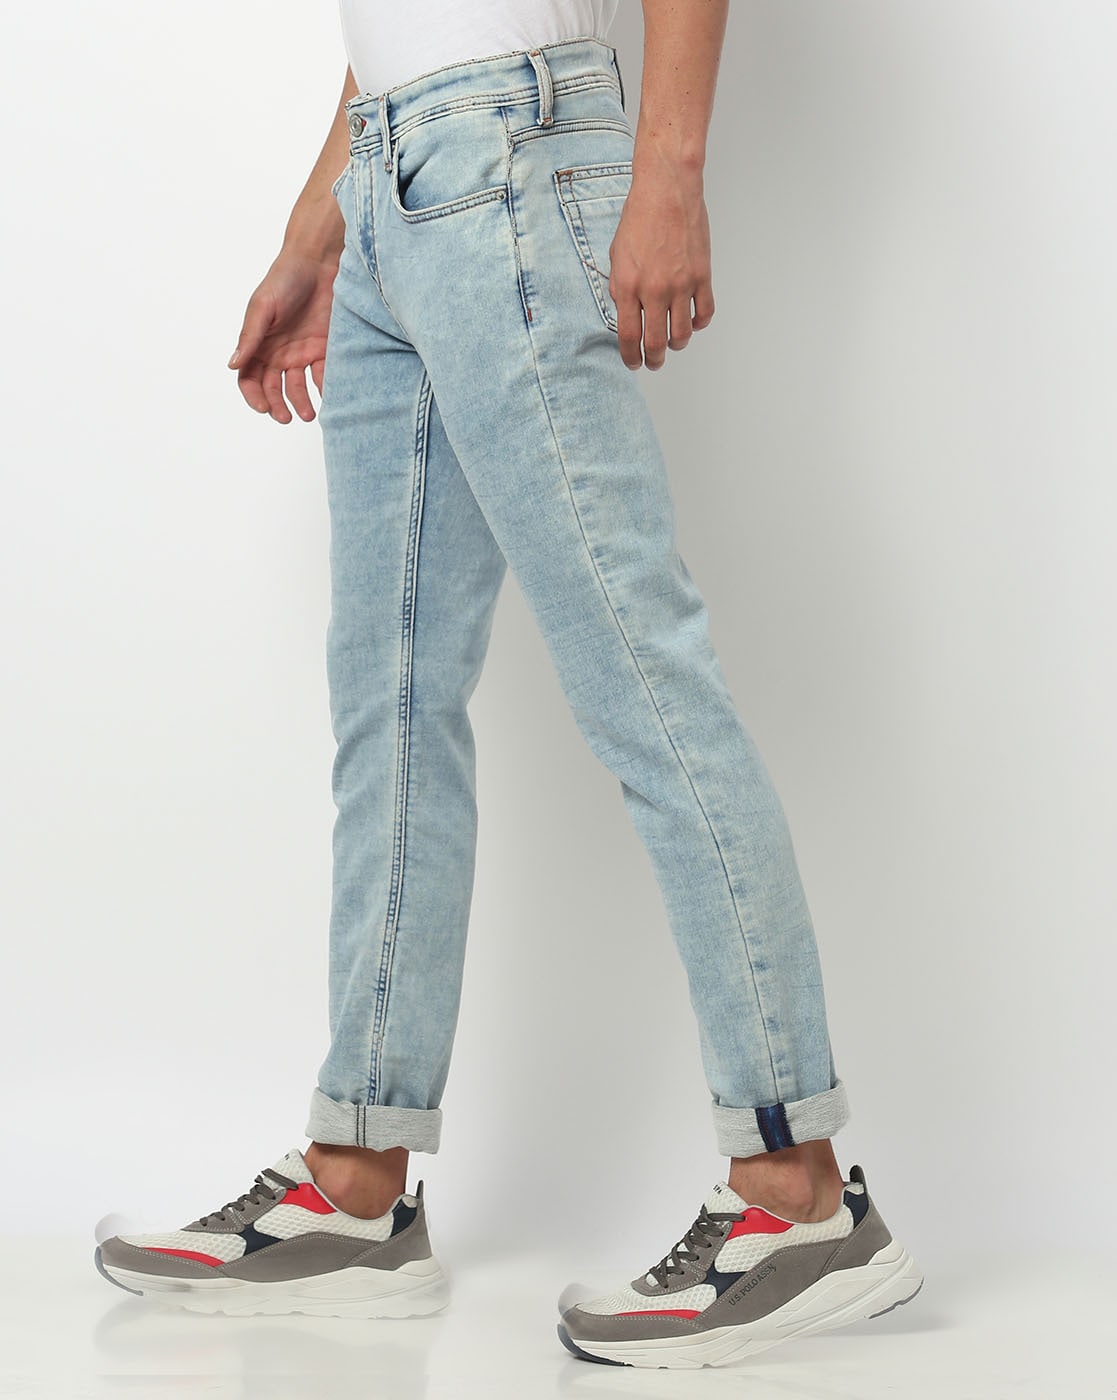 Size 32 authentic edwin denim men jeans, Men's Fashion, Bottoms, Jeans on  Carousell